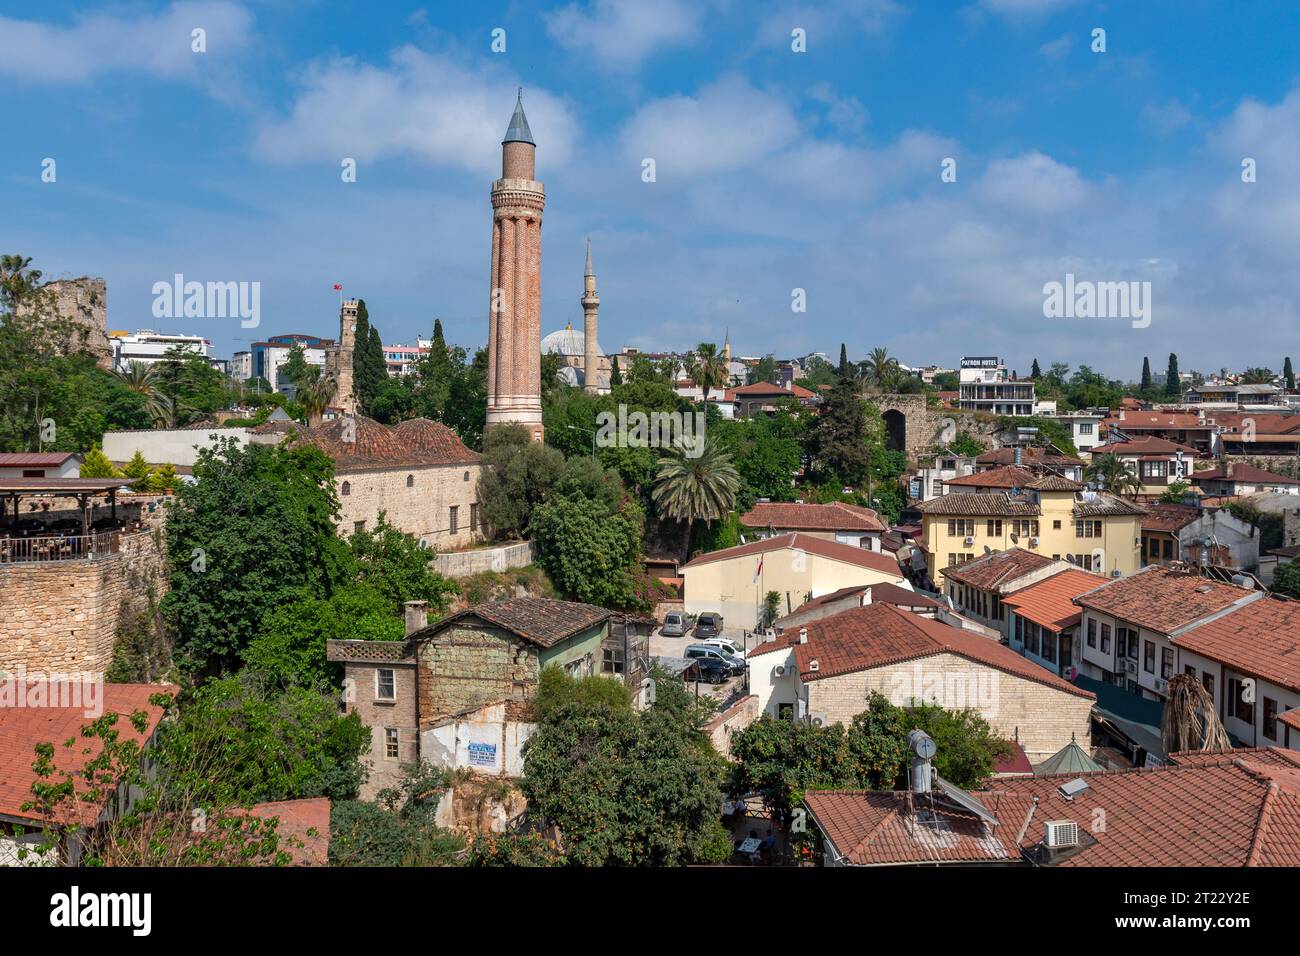 Fluted Minaret, Yivliminare Cami mosque, Kaleiçi, Antalya, Antalya Province, Turkey Stock Photo